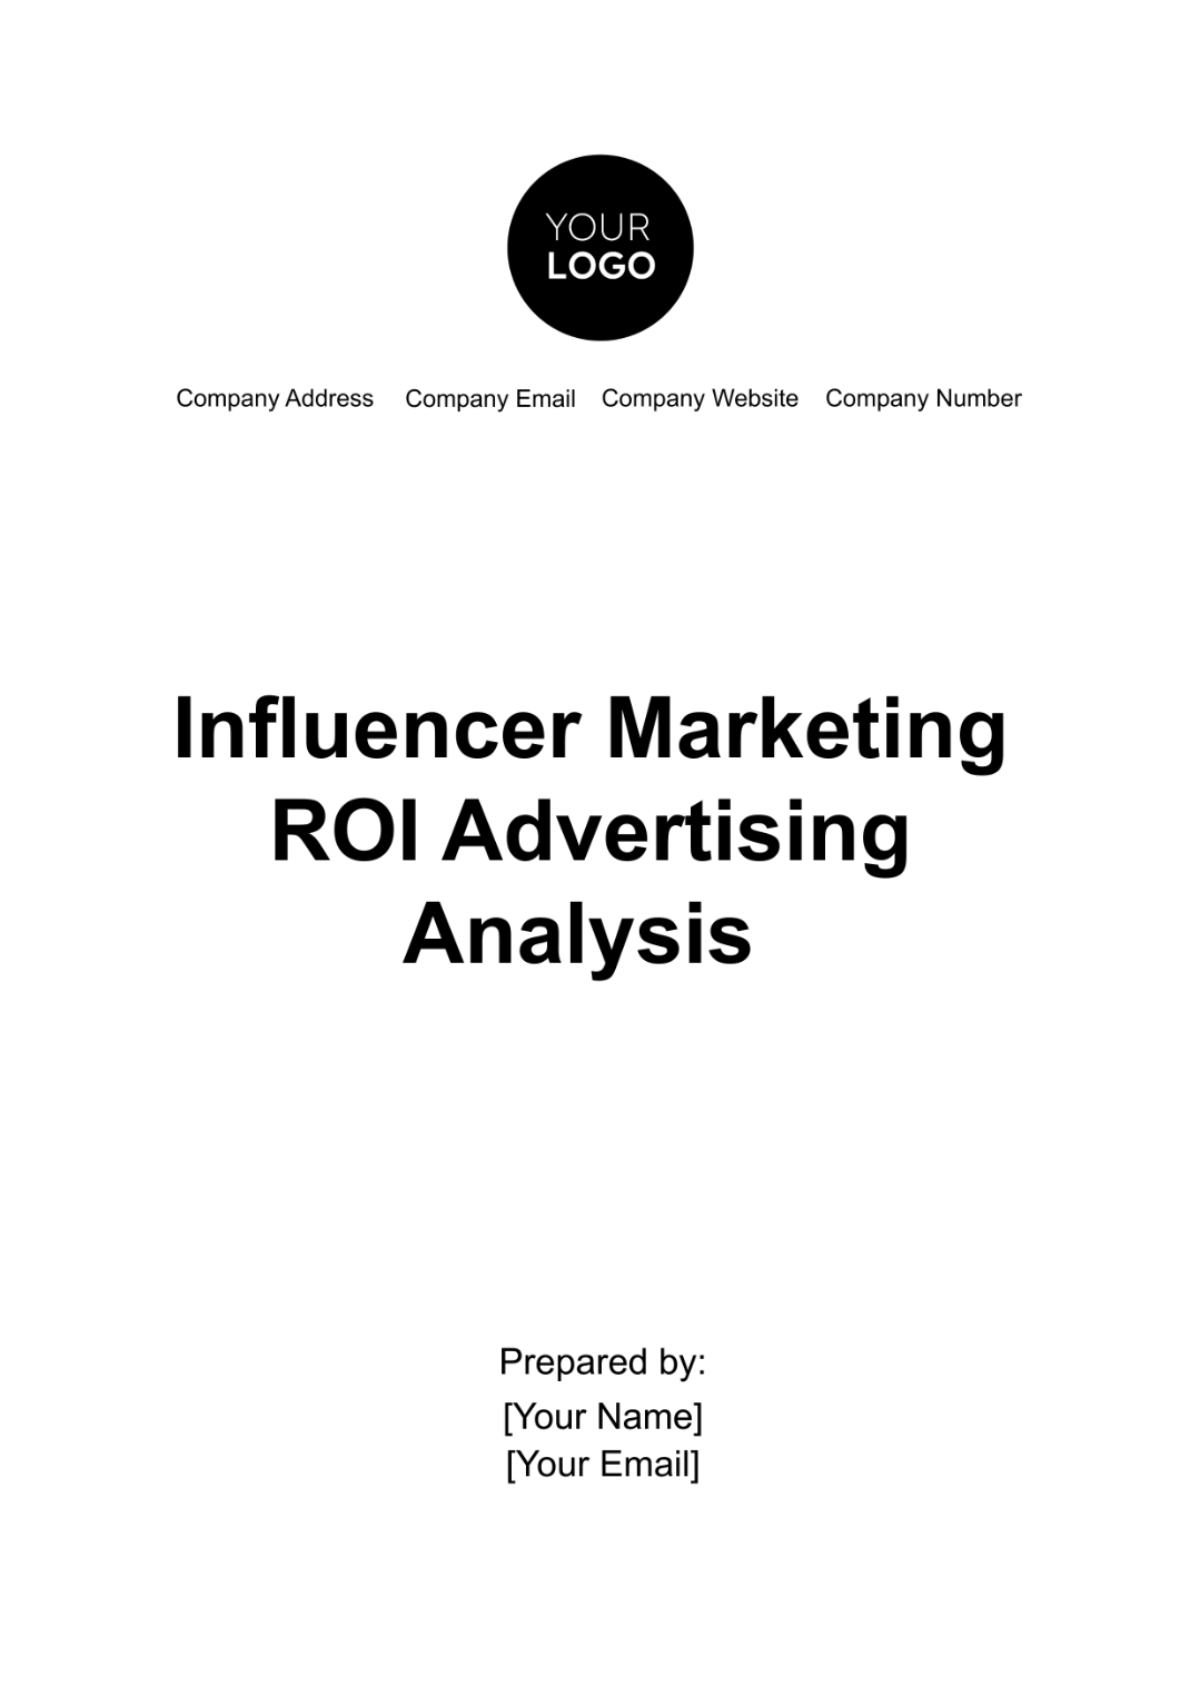 Free Influencer Marketing ROI Advertising Analysis Template